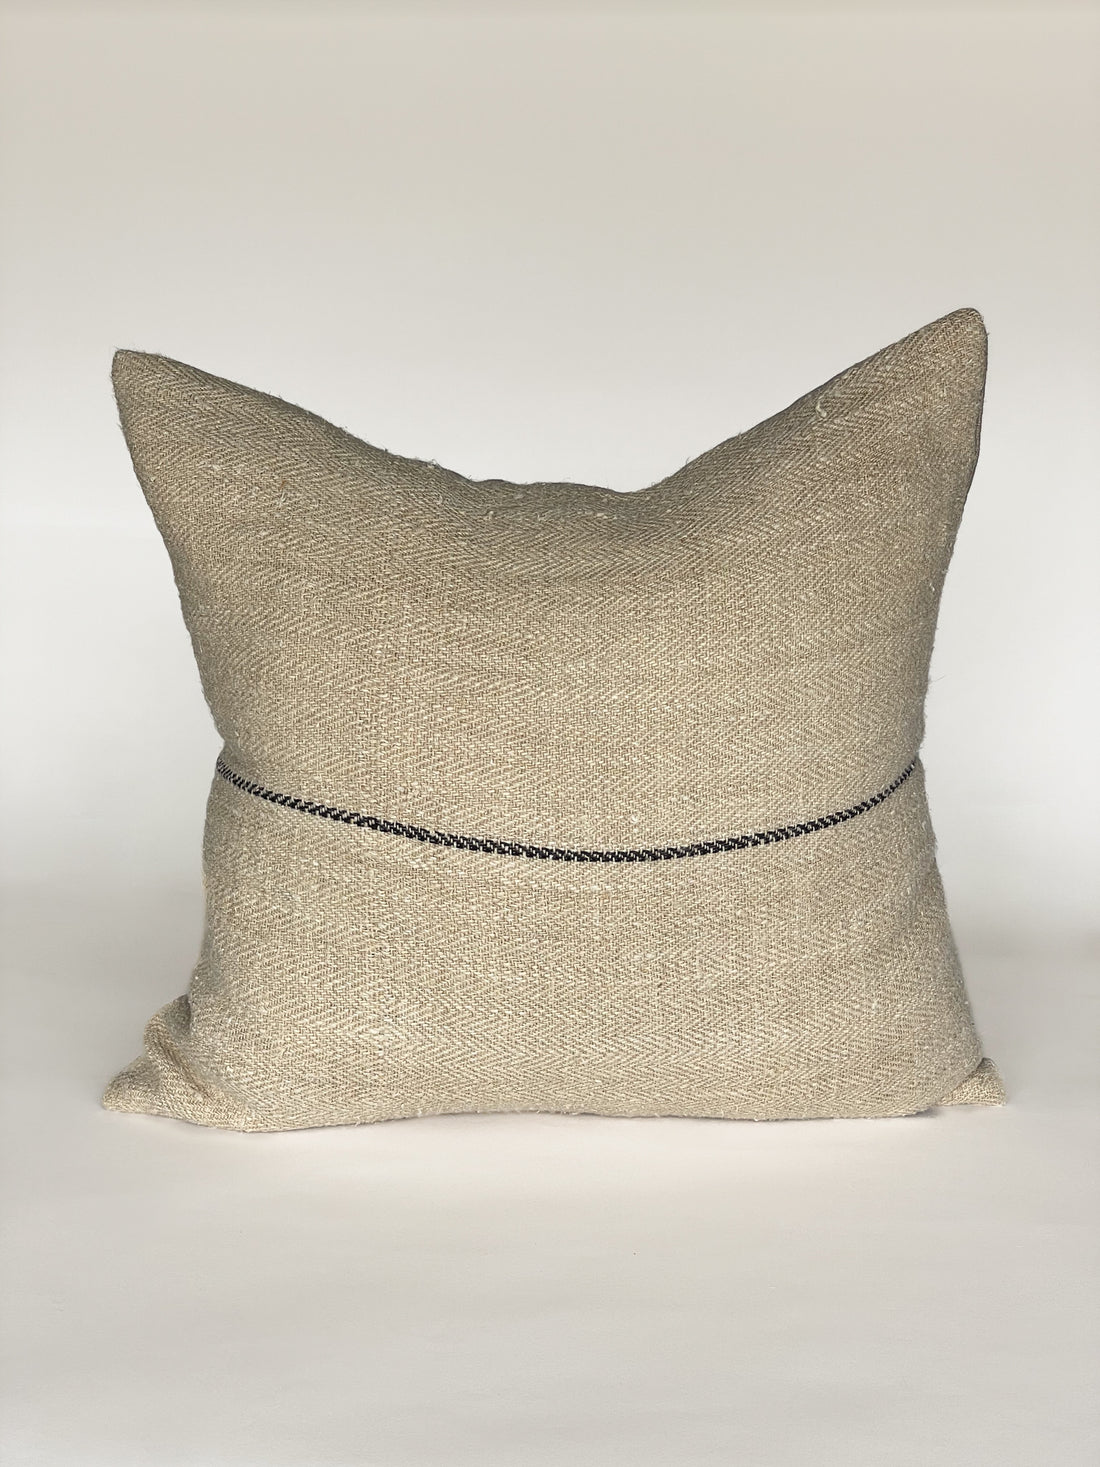 Textured Tan Pillow with Black Stripe